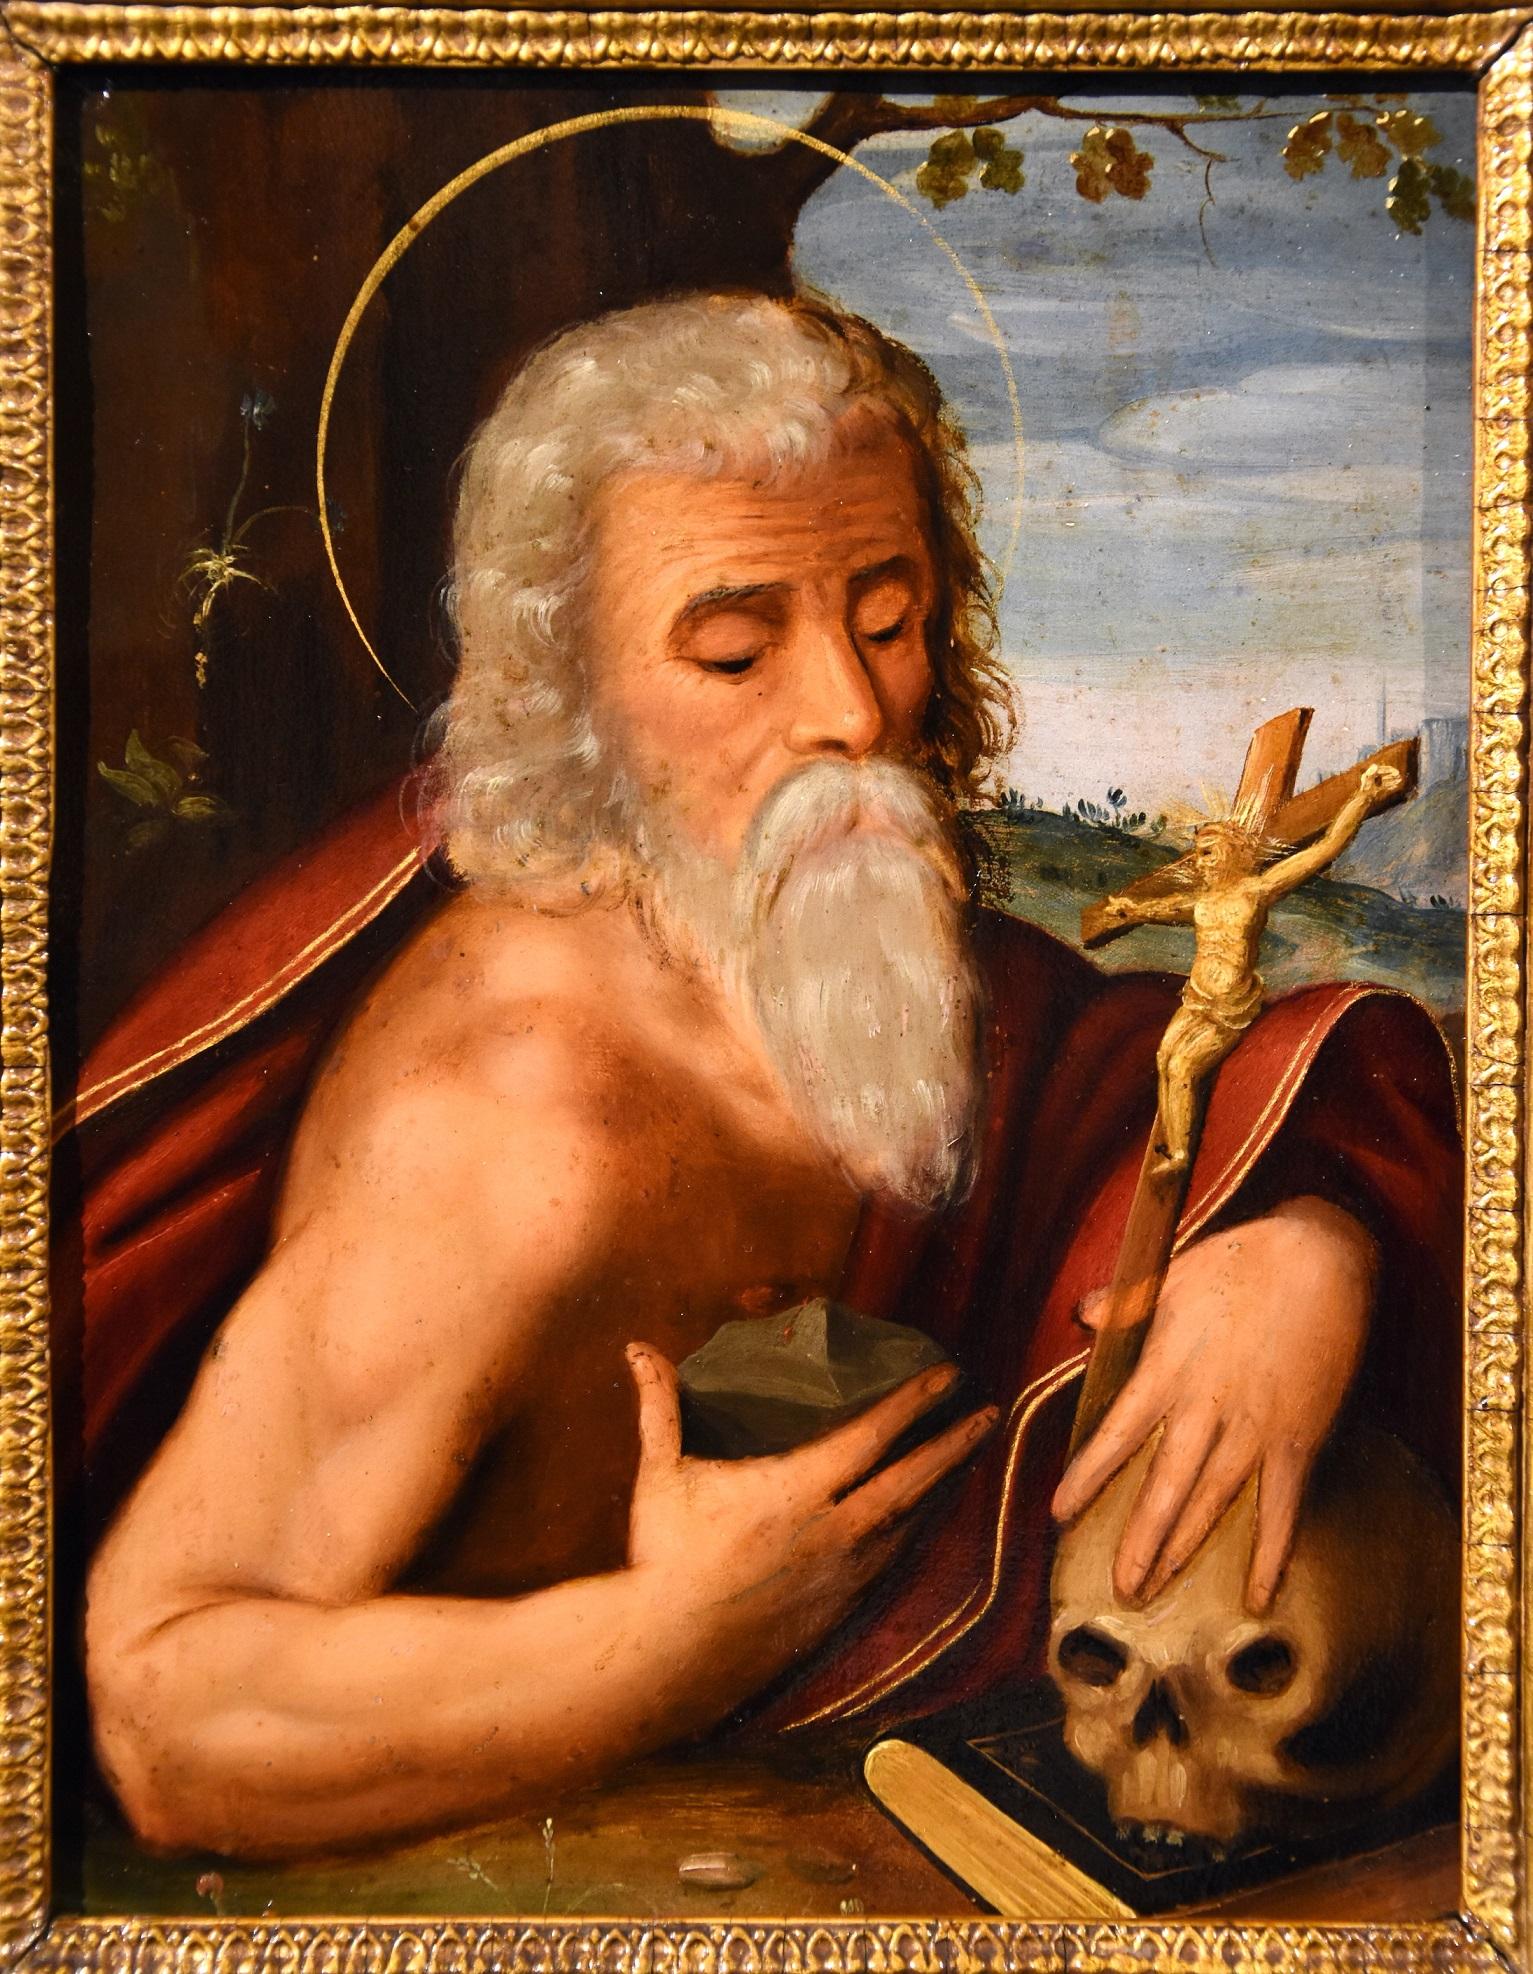 Saint Jerome Öl auf Kupfer 16. Jahrhundert Gemälde Alter Meister Italien Emilianische Schule (Alte Meister), Painting, von Giuseppe Mazzuoli known as Bastarolo (Ferrara 1536 - 1589)